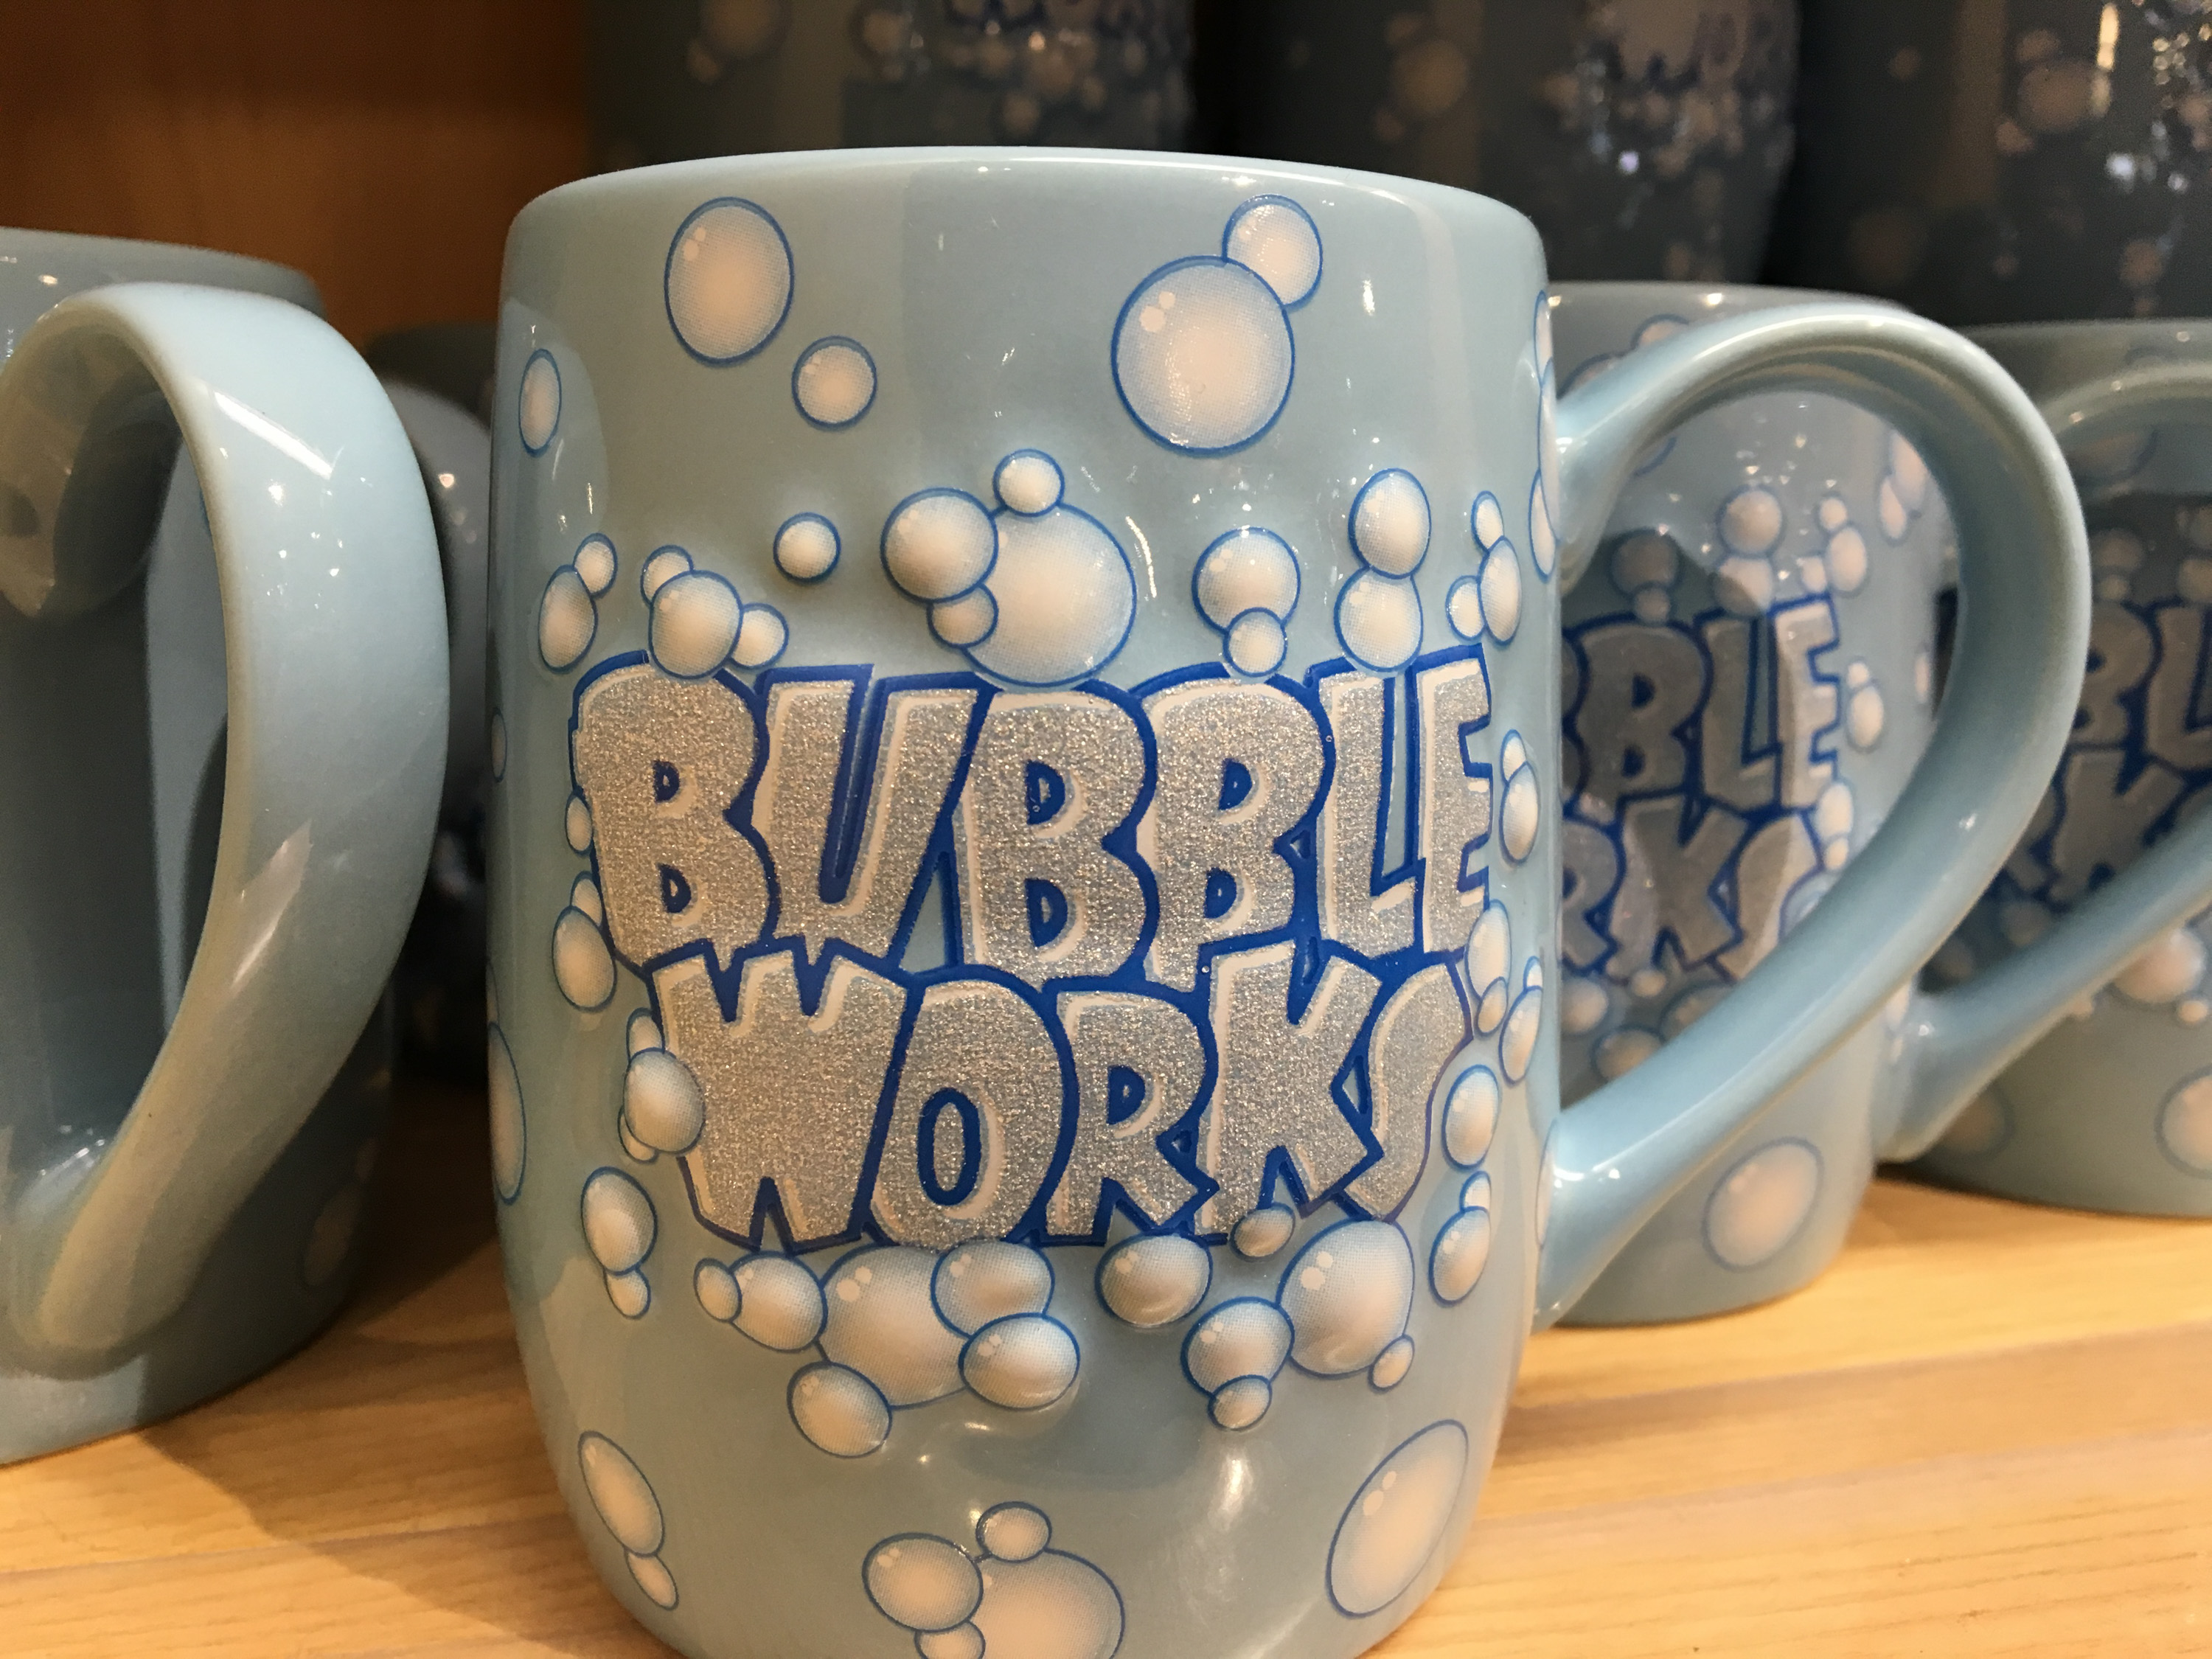 Bubbleworks Merchandise Sale Begins